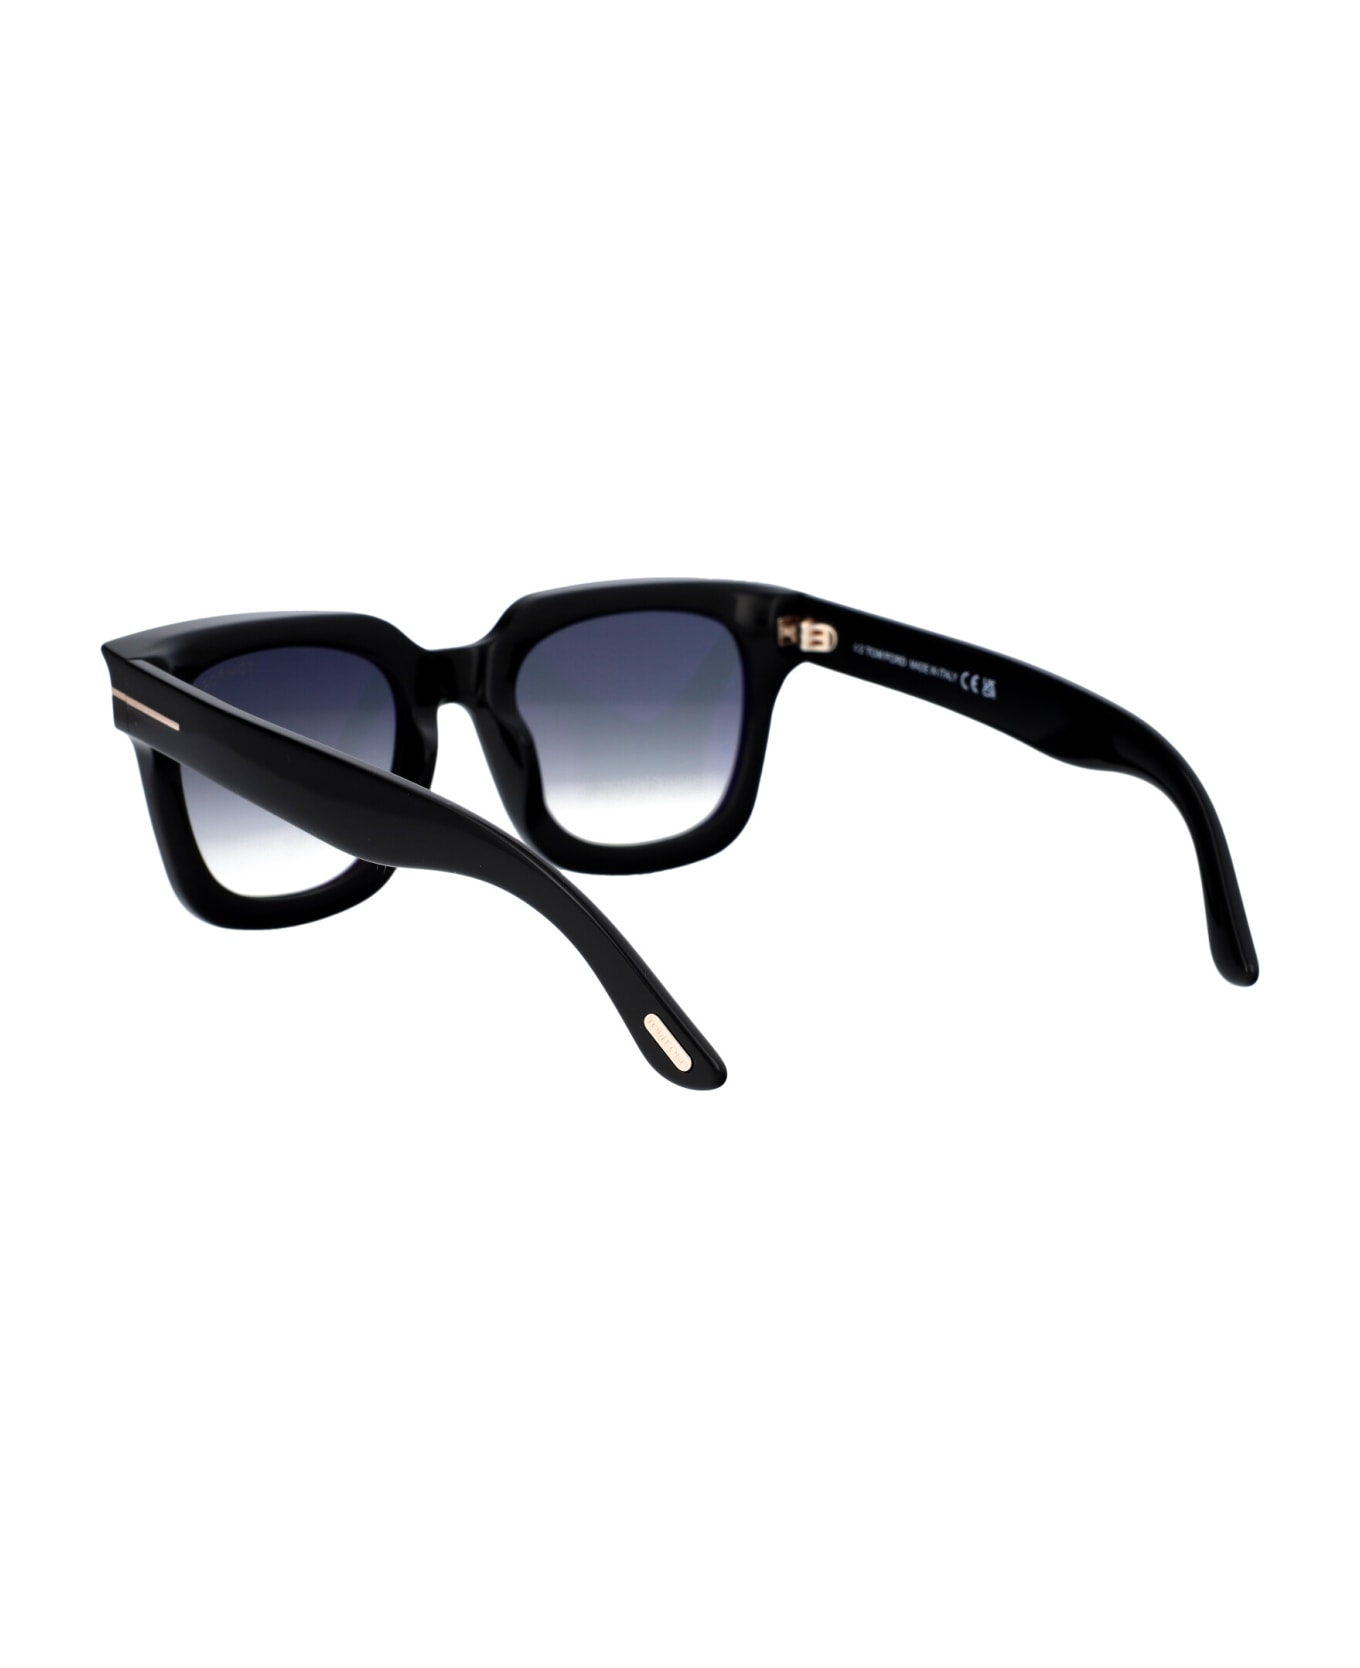 Tom Ford Eyewear Leigh-02 Sunglasses - 01B Nero Lucido / Fumo Grad